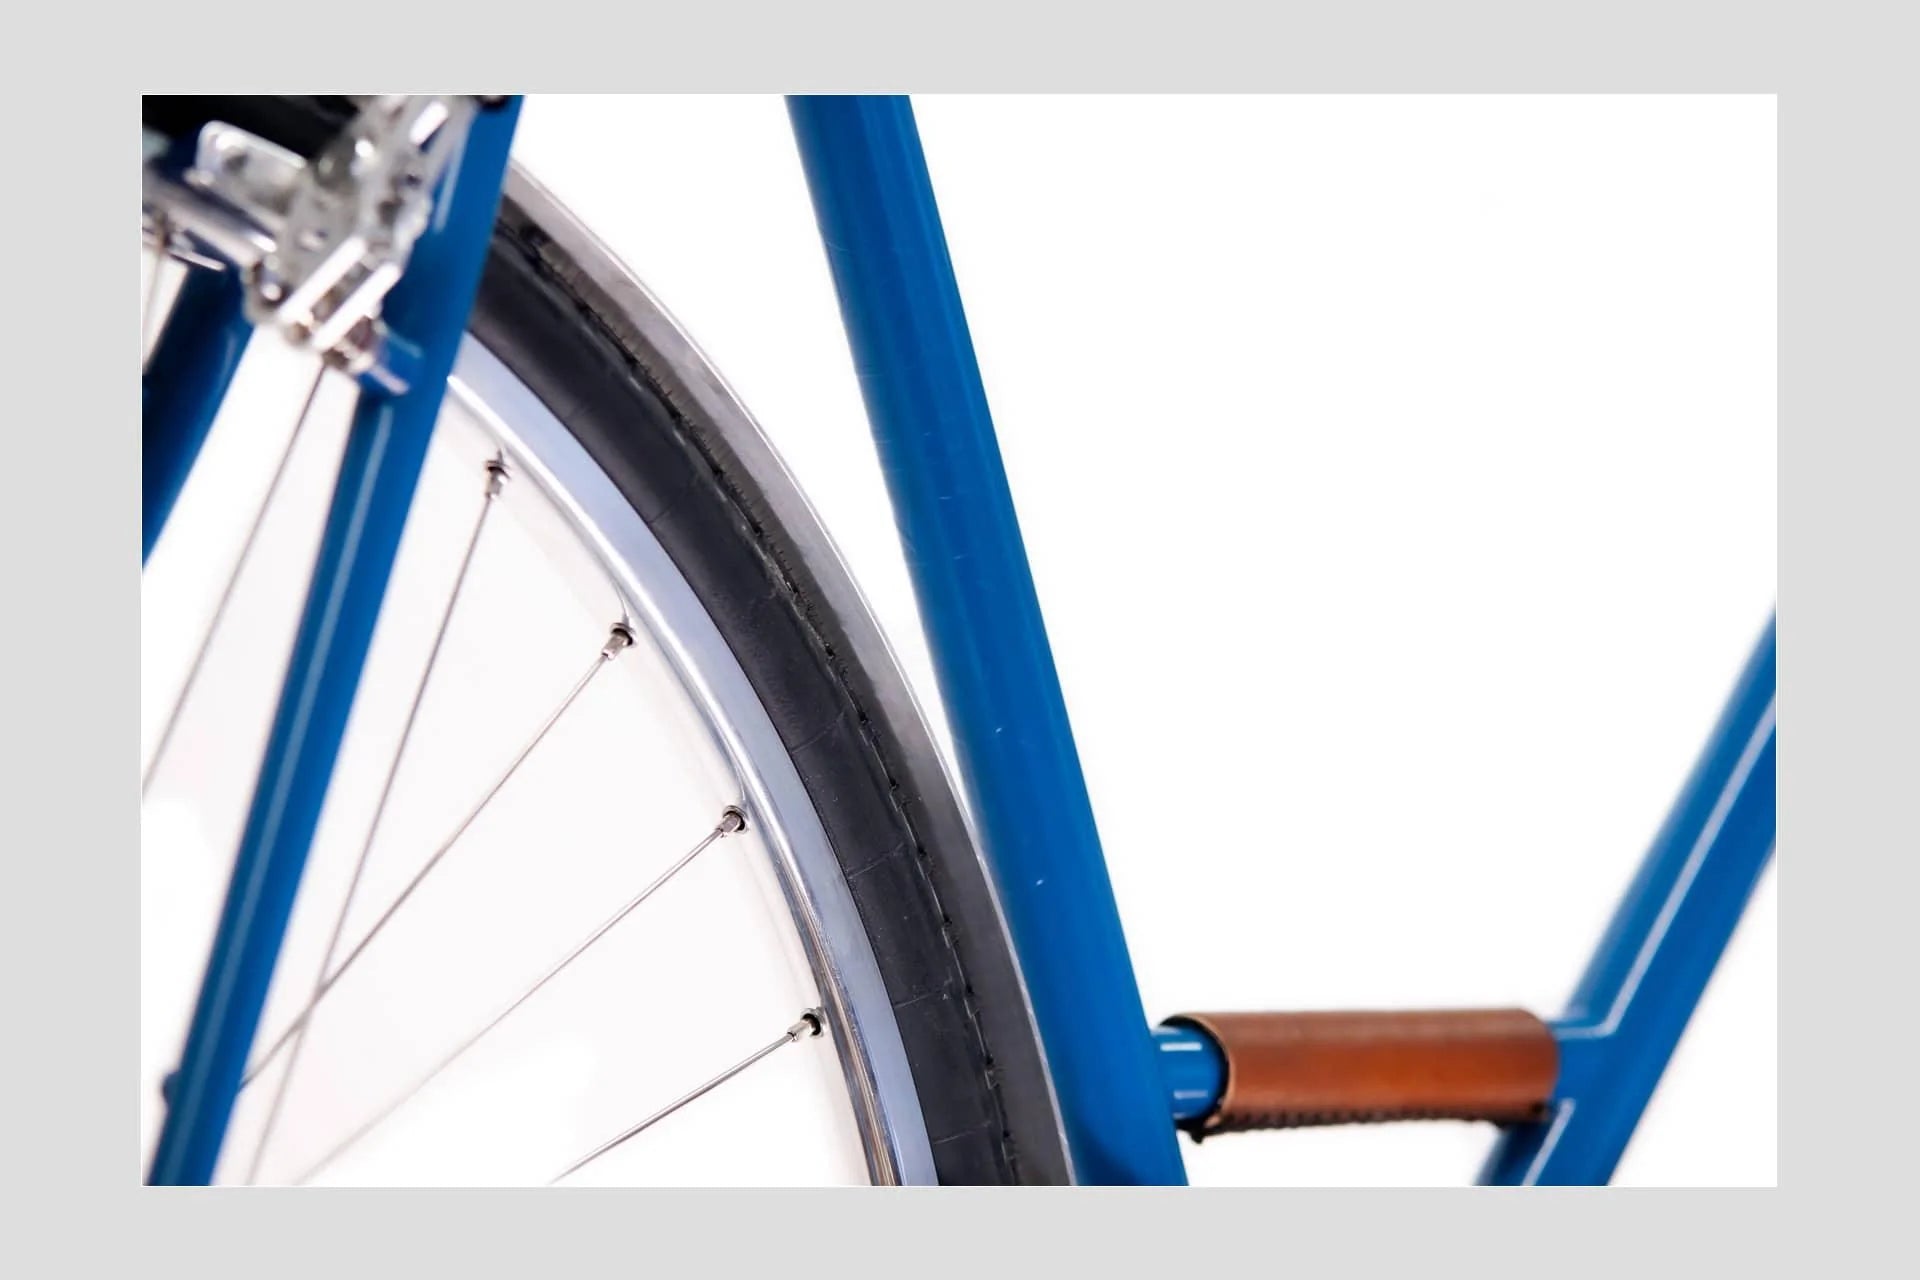 SIGNORE - 4gear - blue - GOrilla . urban cycling